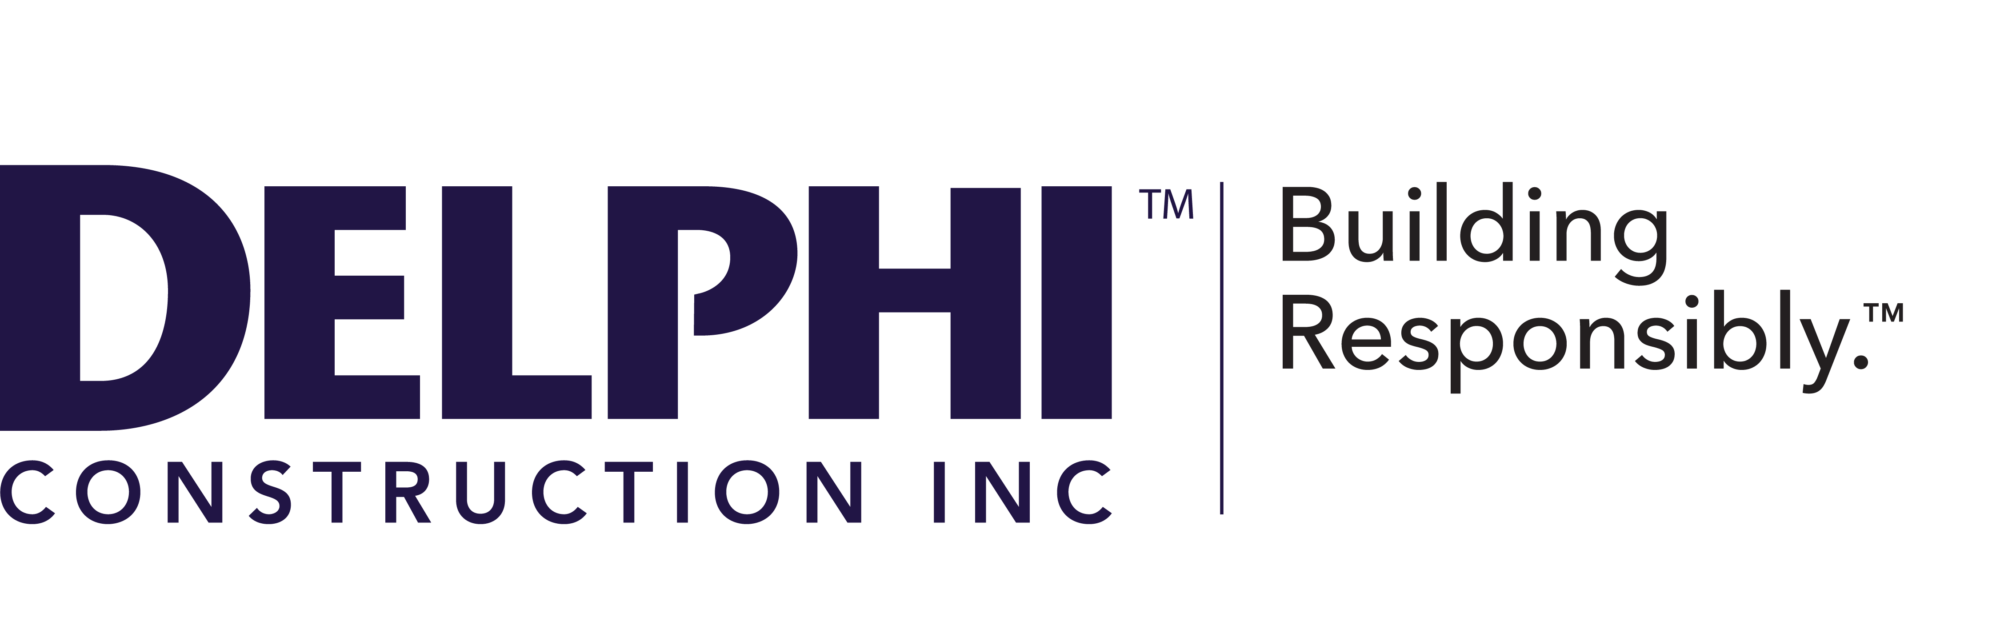 Delphi Logo - Delphi Construction Market Construction Company. Delphi